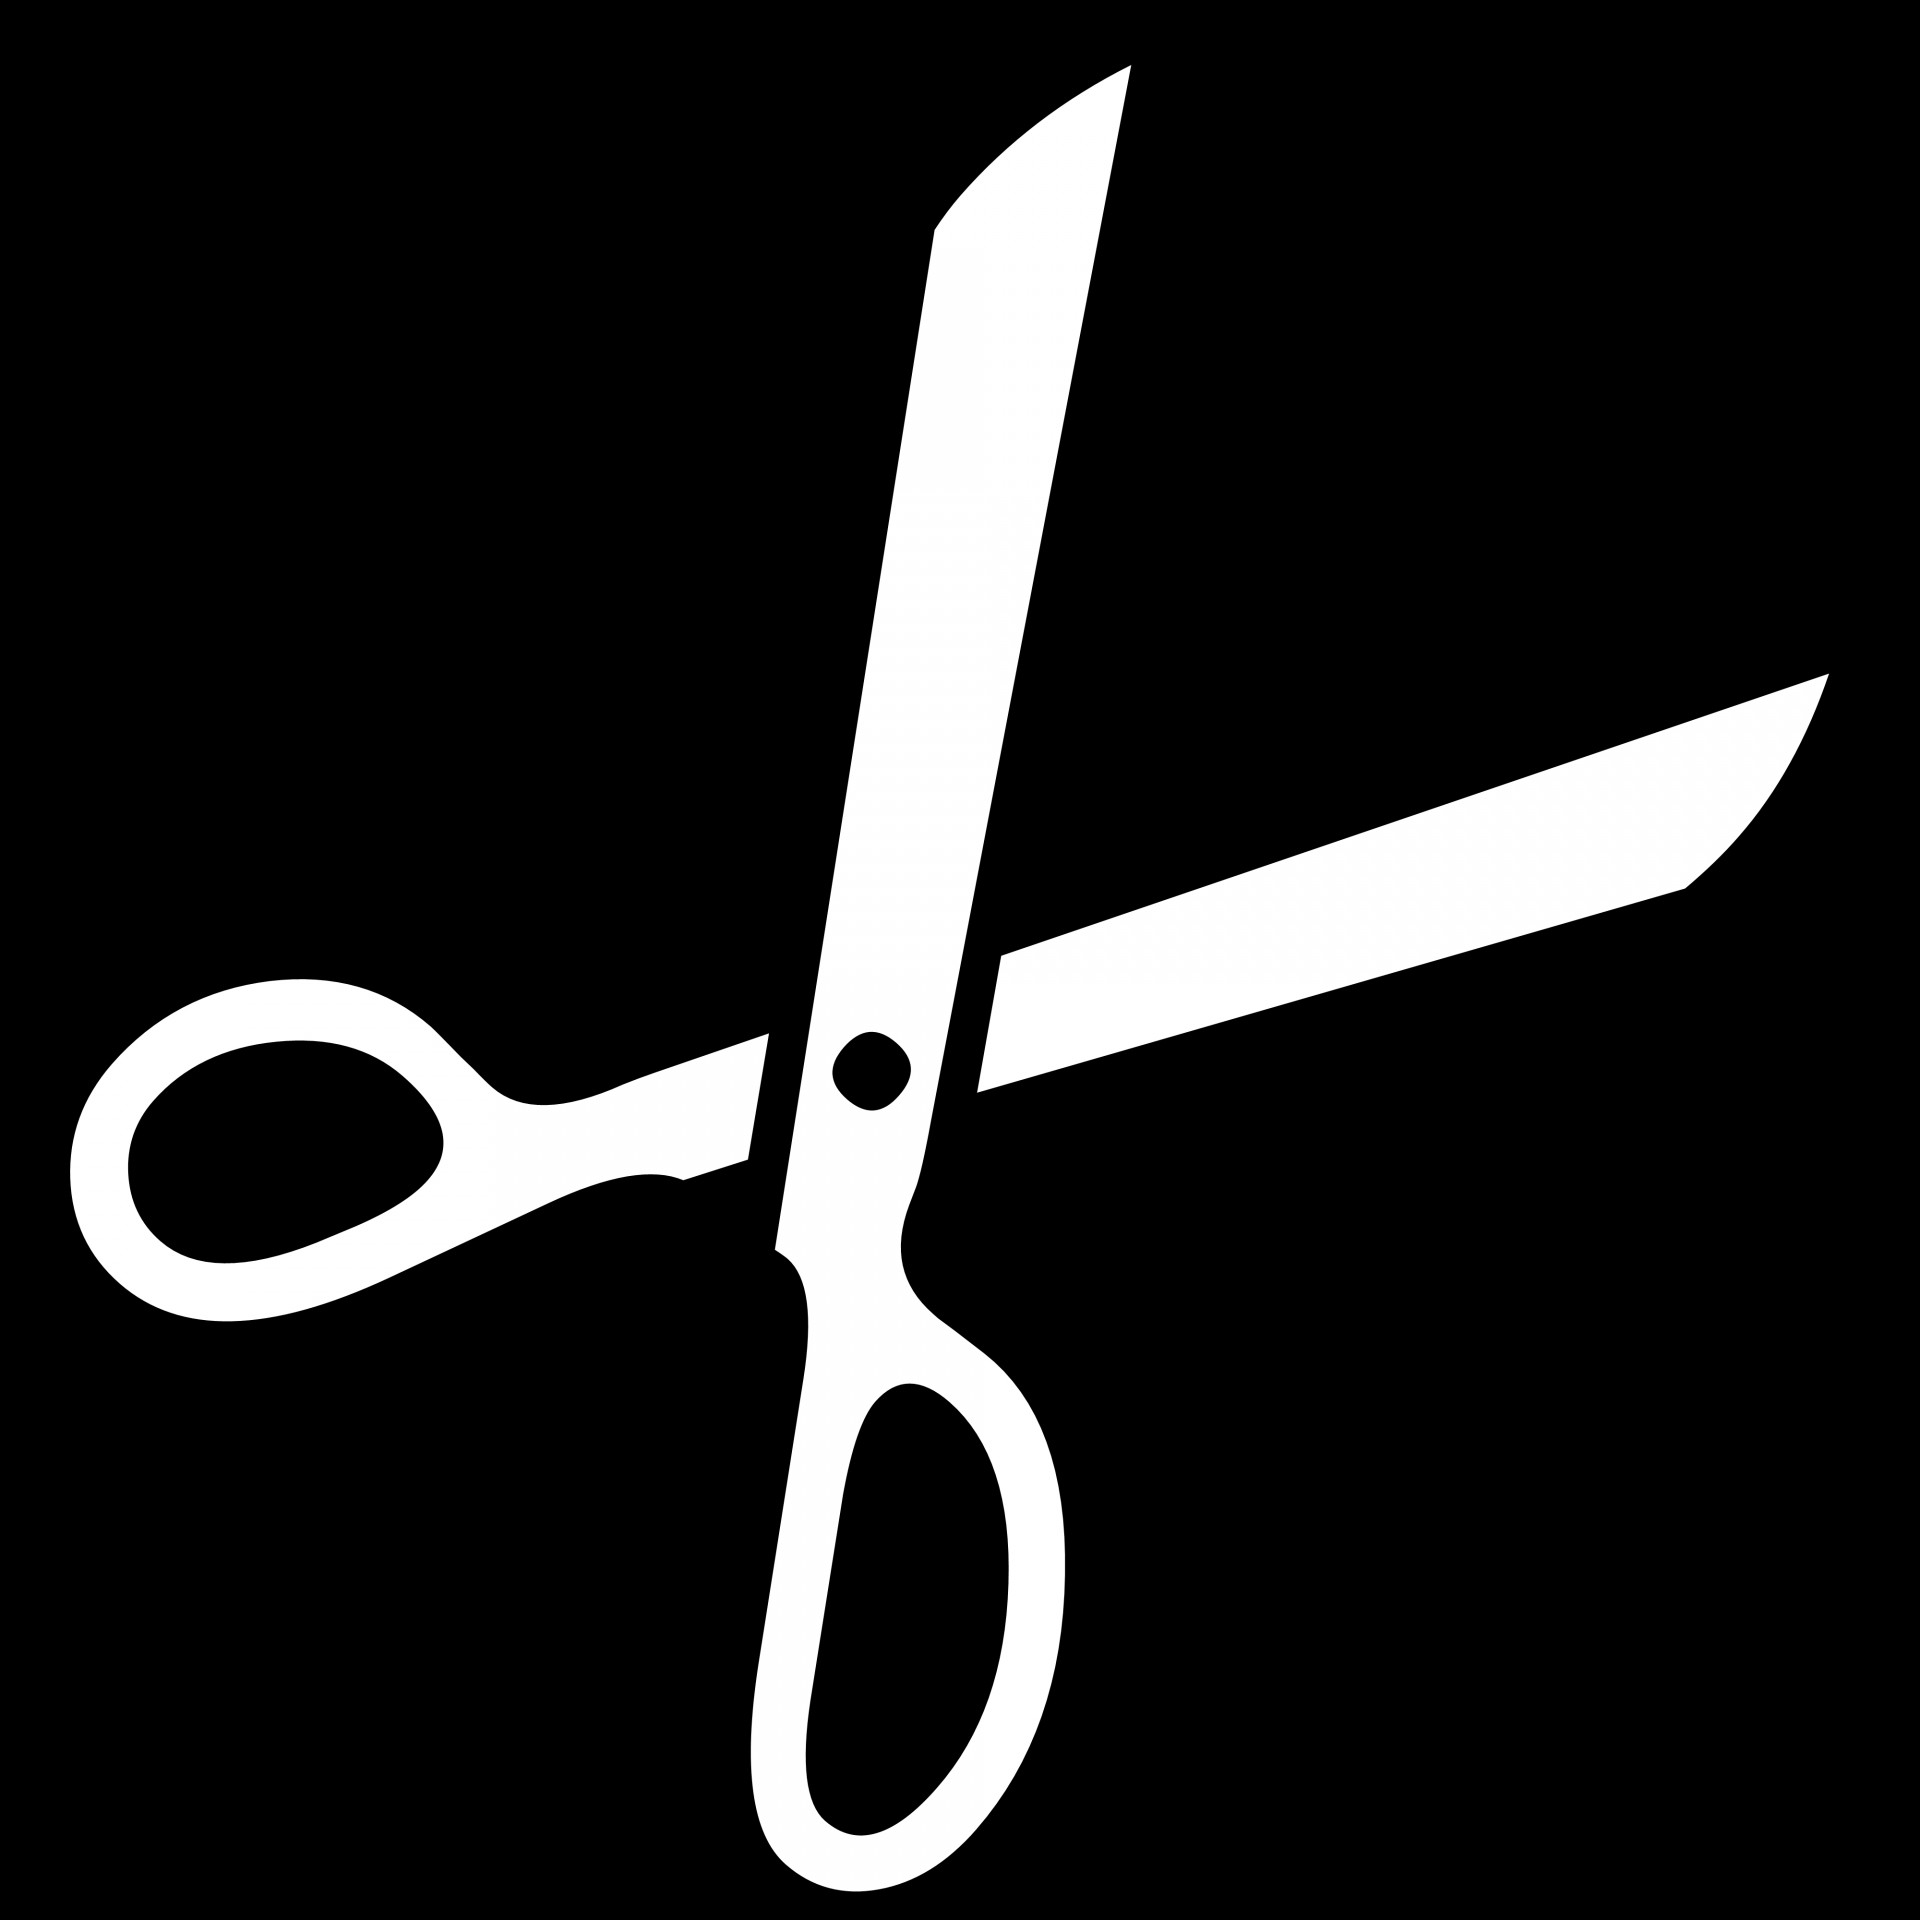 scissor icon symbol free photo